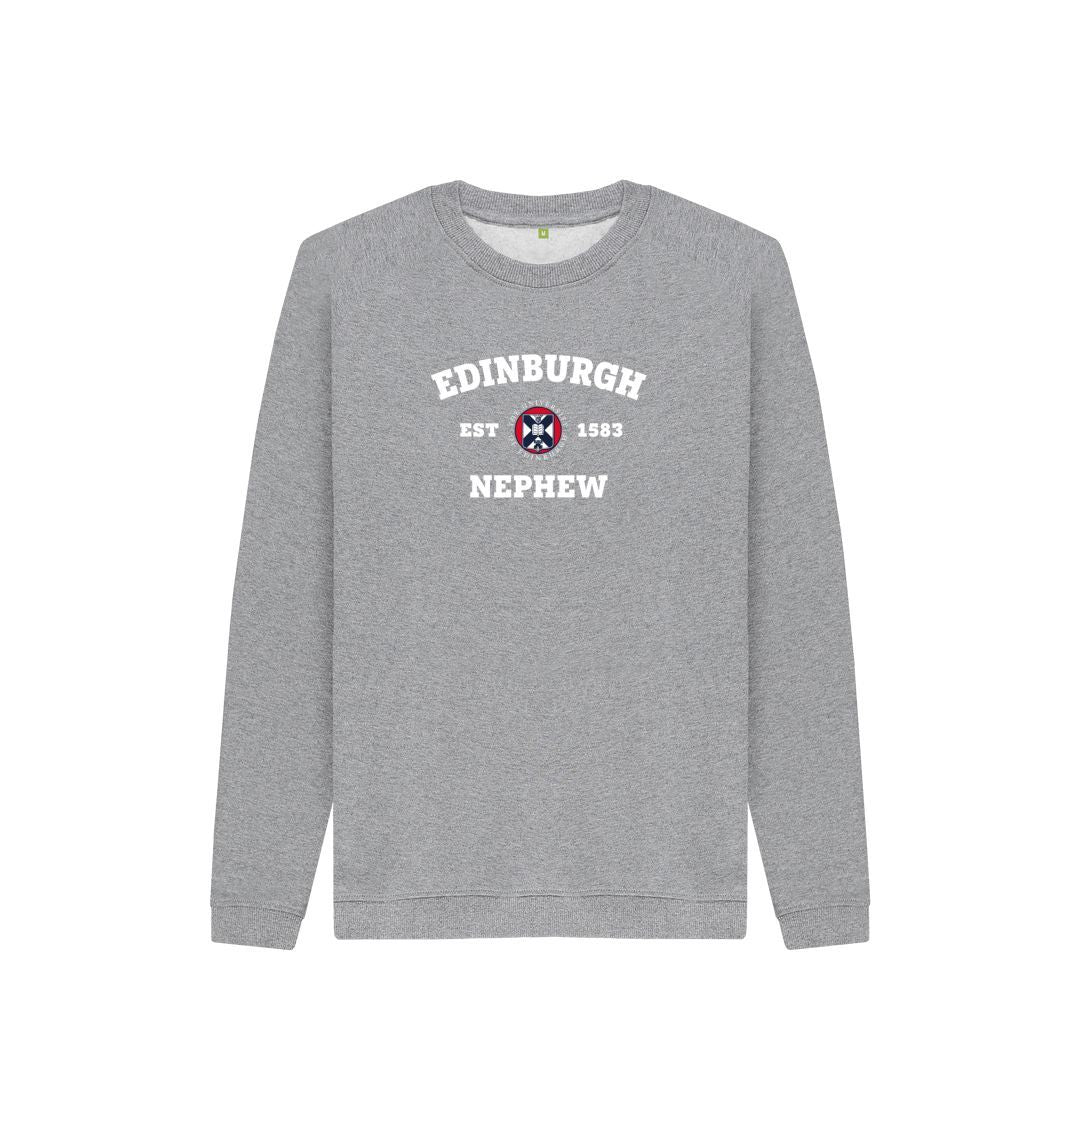 Athletic Grey Kids Edinburgh Nephew Sweatshirt